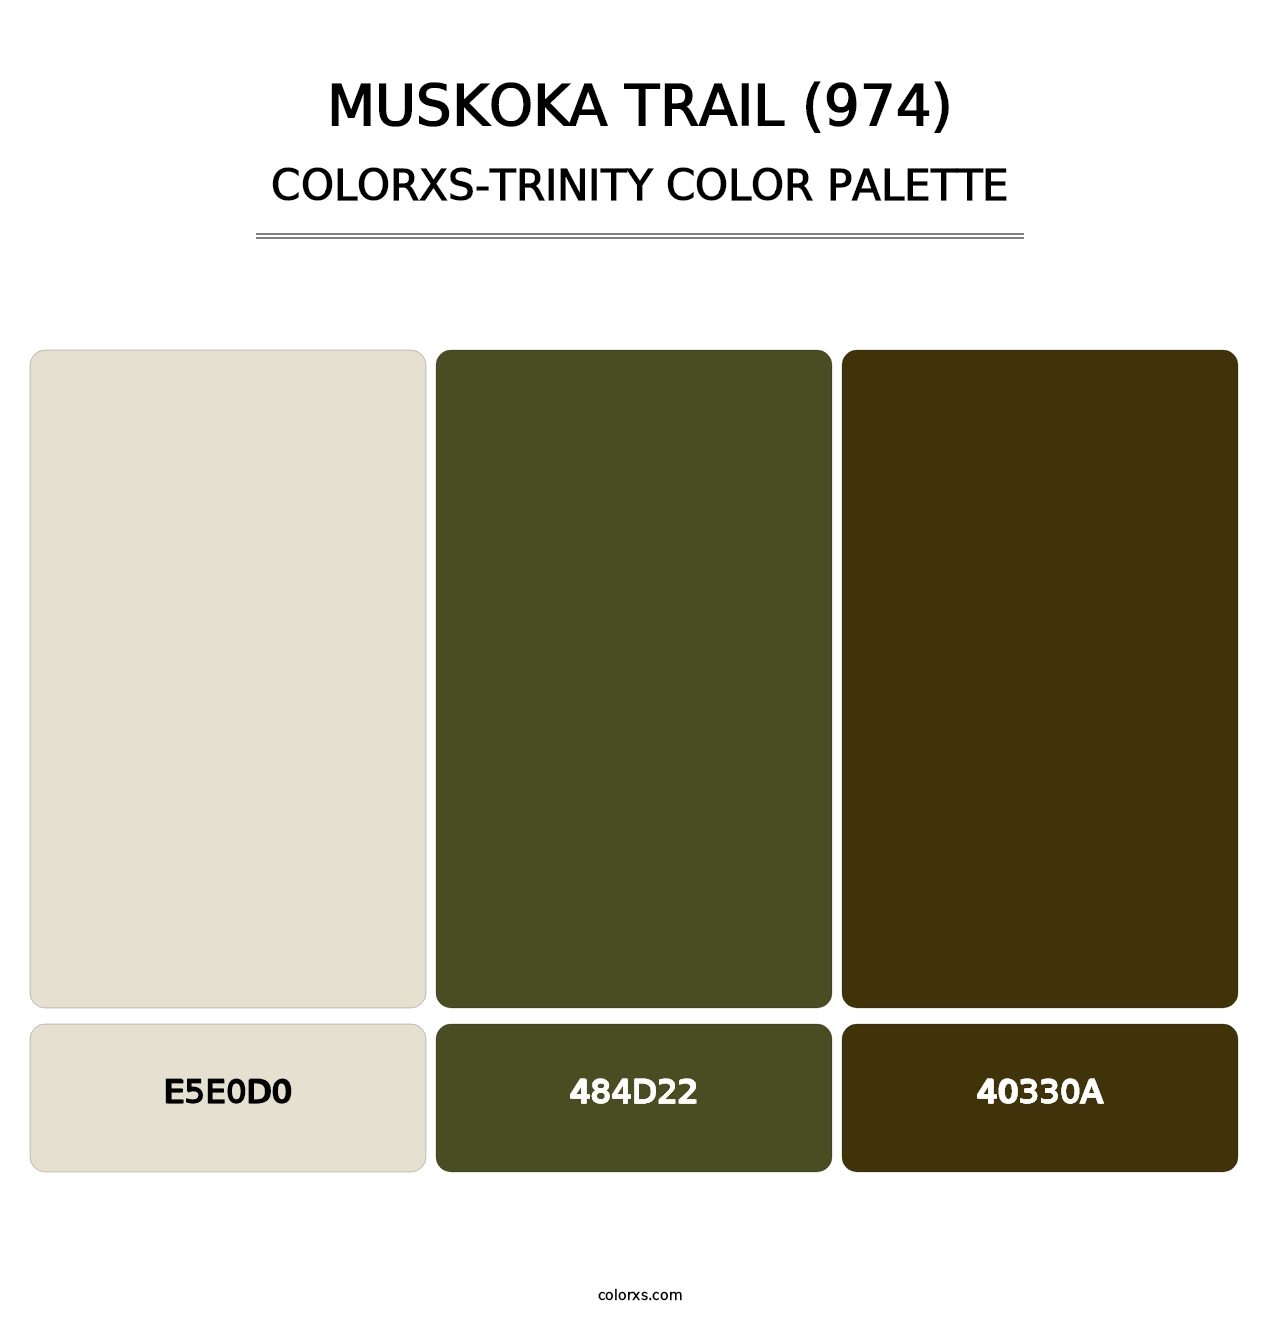 Muskoka Trail (974) - Colorxs Trinity Palette